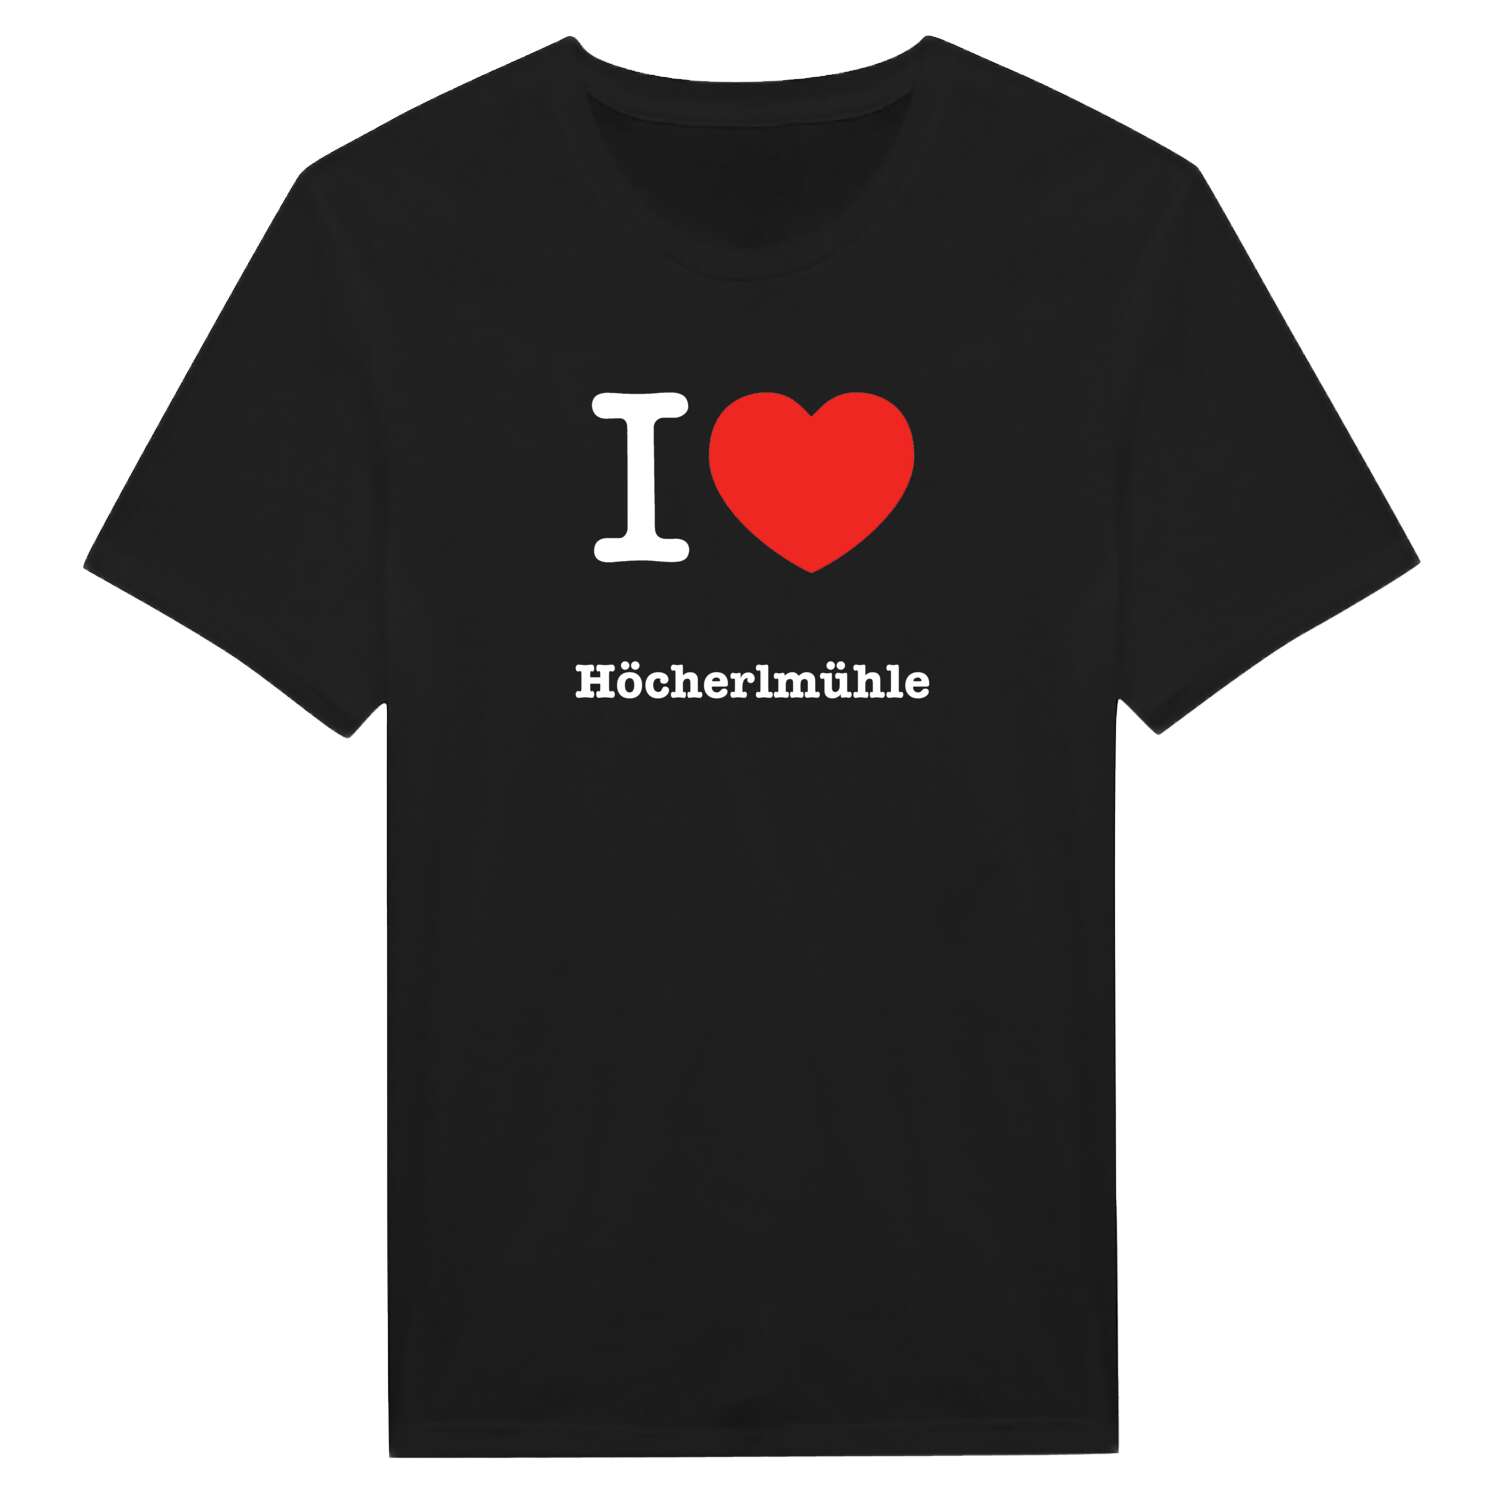 Höcherlmühle T-Shirt »I love«